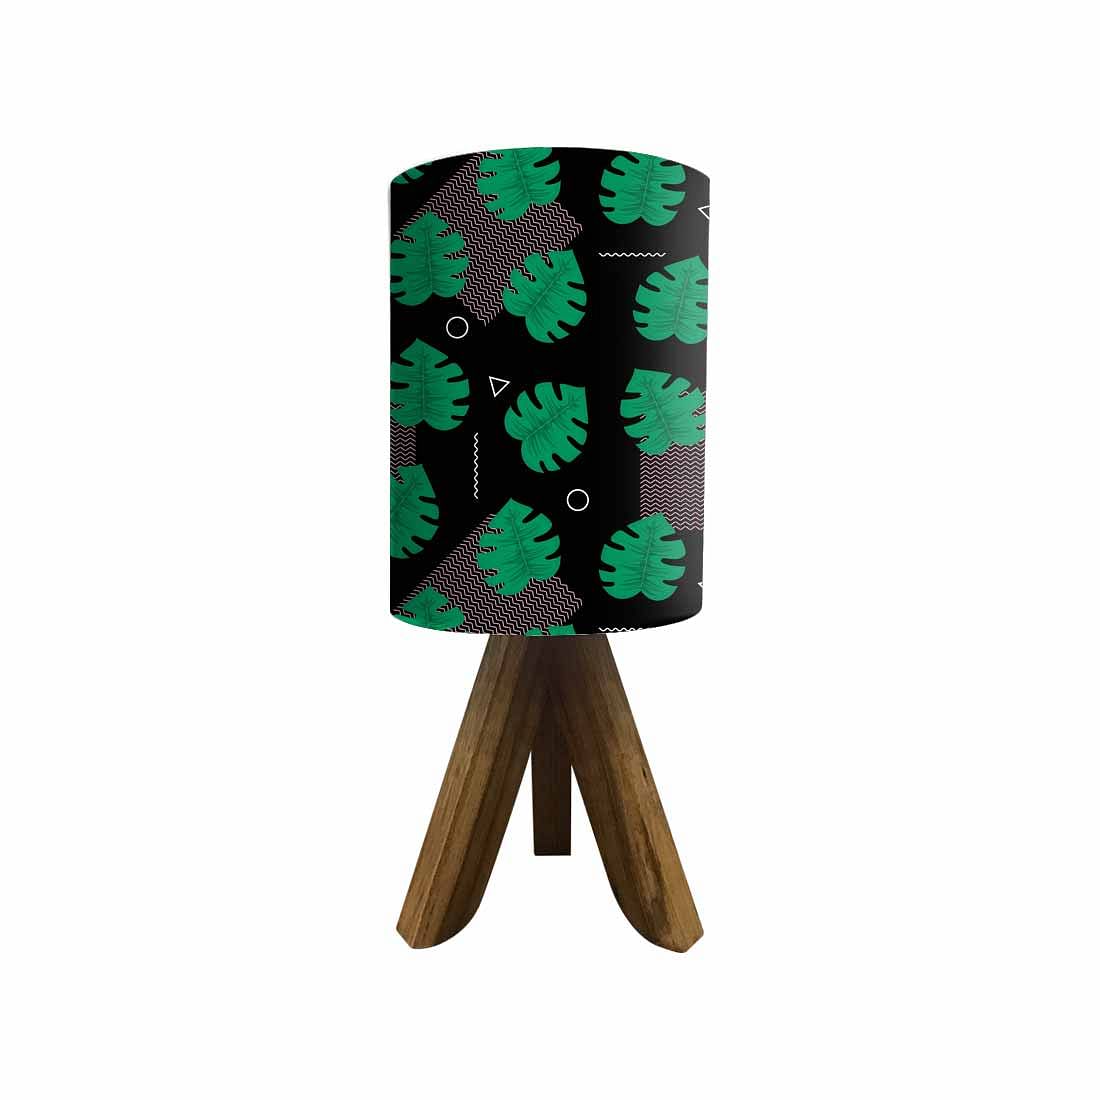 Wooden Table Lamp For Bedroom - Monstera Designs Black Nutcase